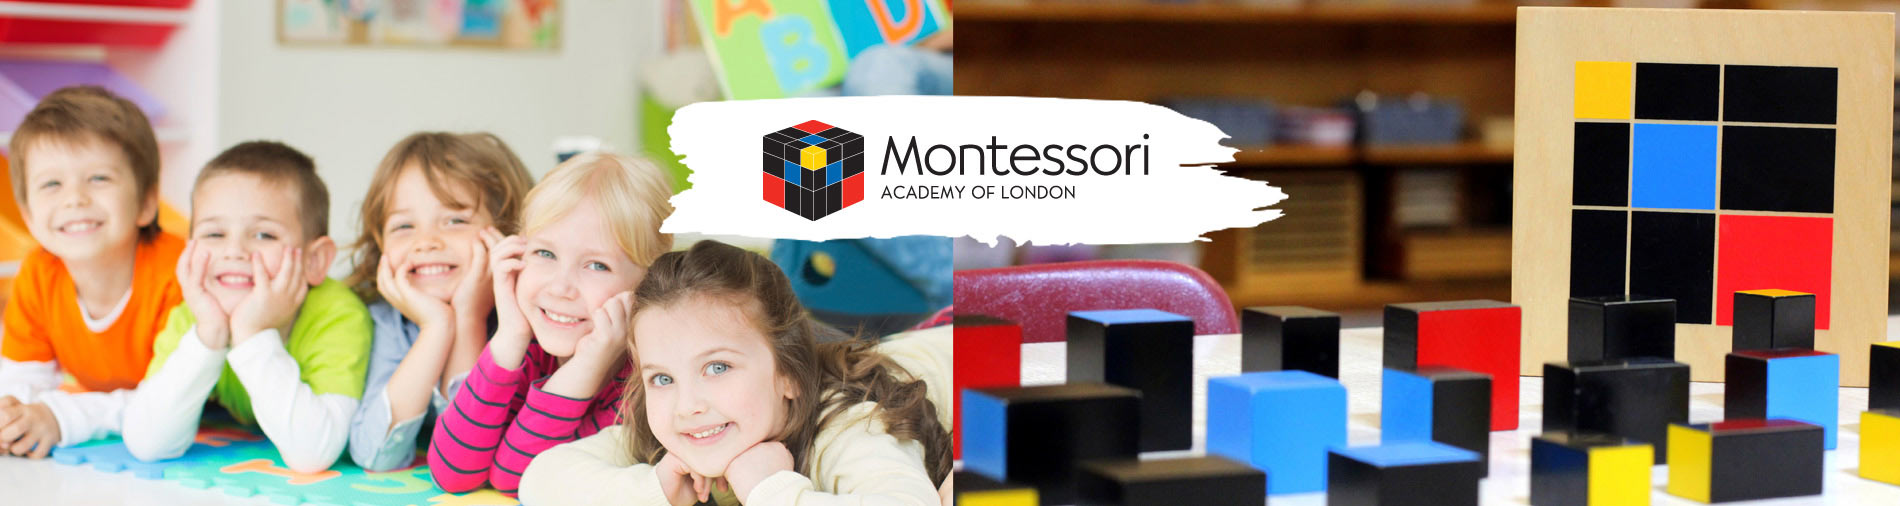 Montessori Academy of London – Custom Website Design